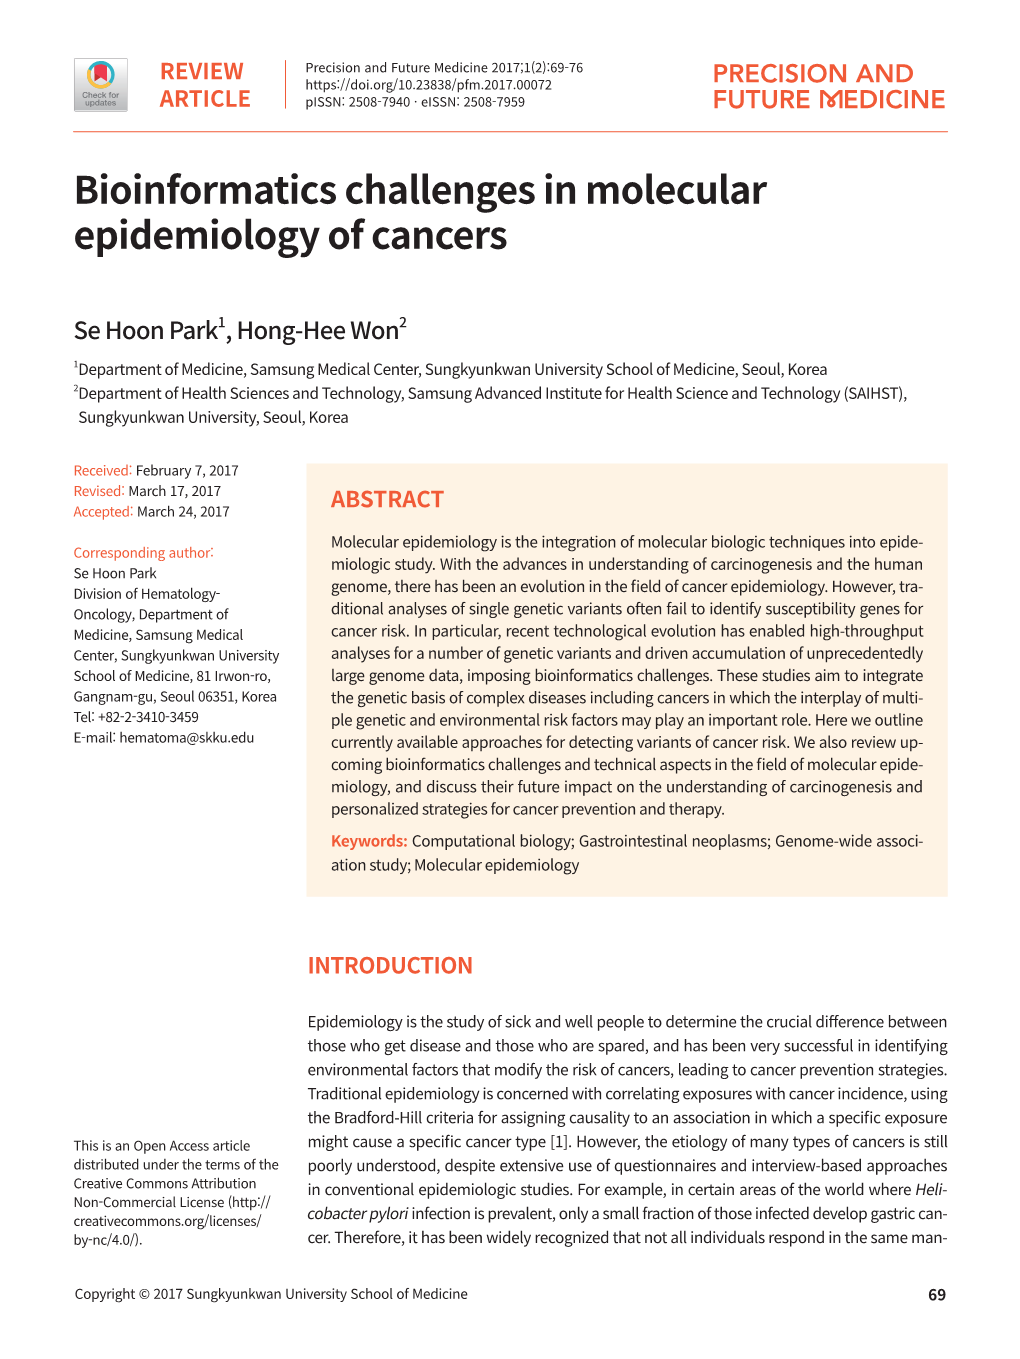 Bioinformatics Challenges in Molecular Epidemiology of Cancers